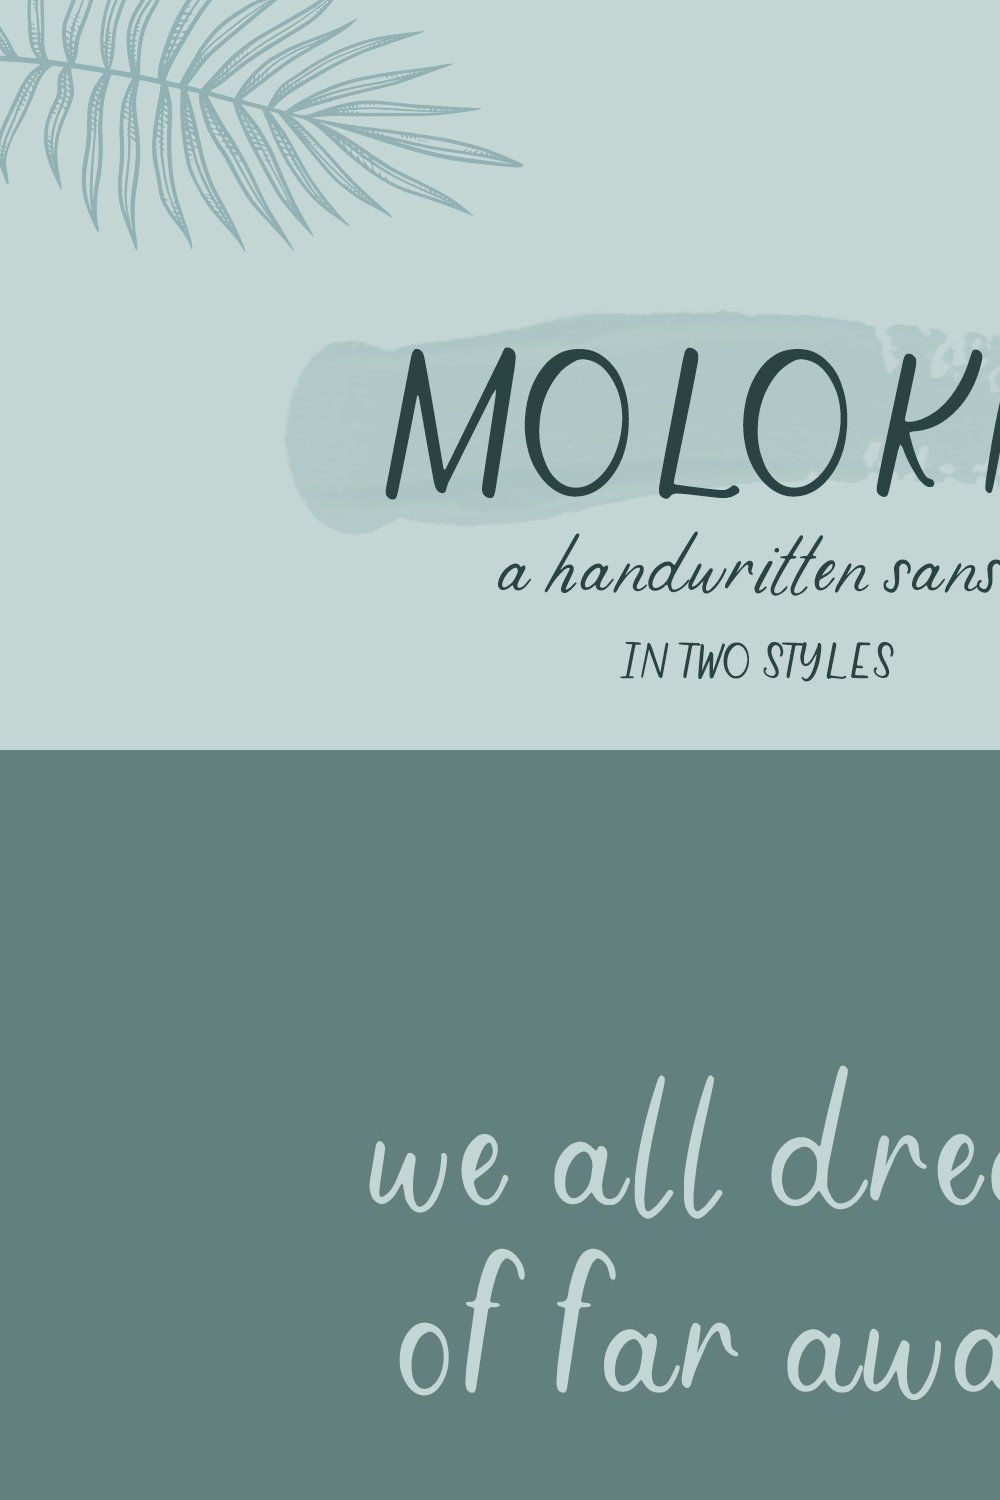 Molokai Sans Duo pinterest preview image.